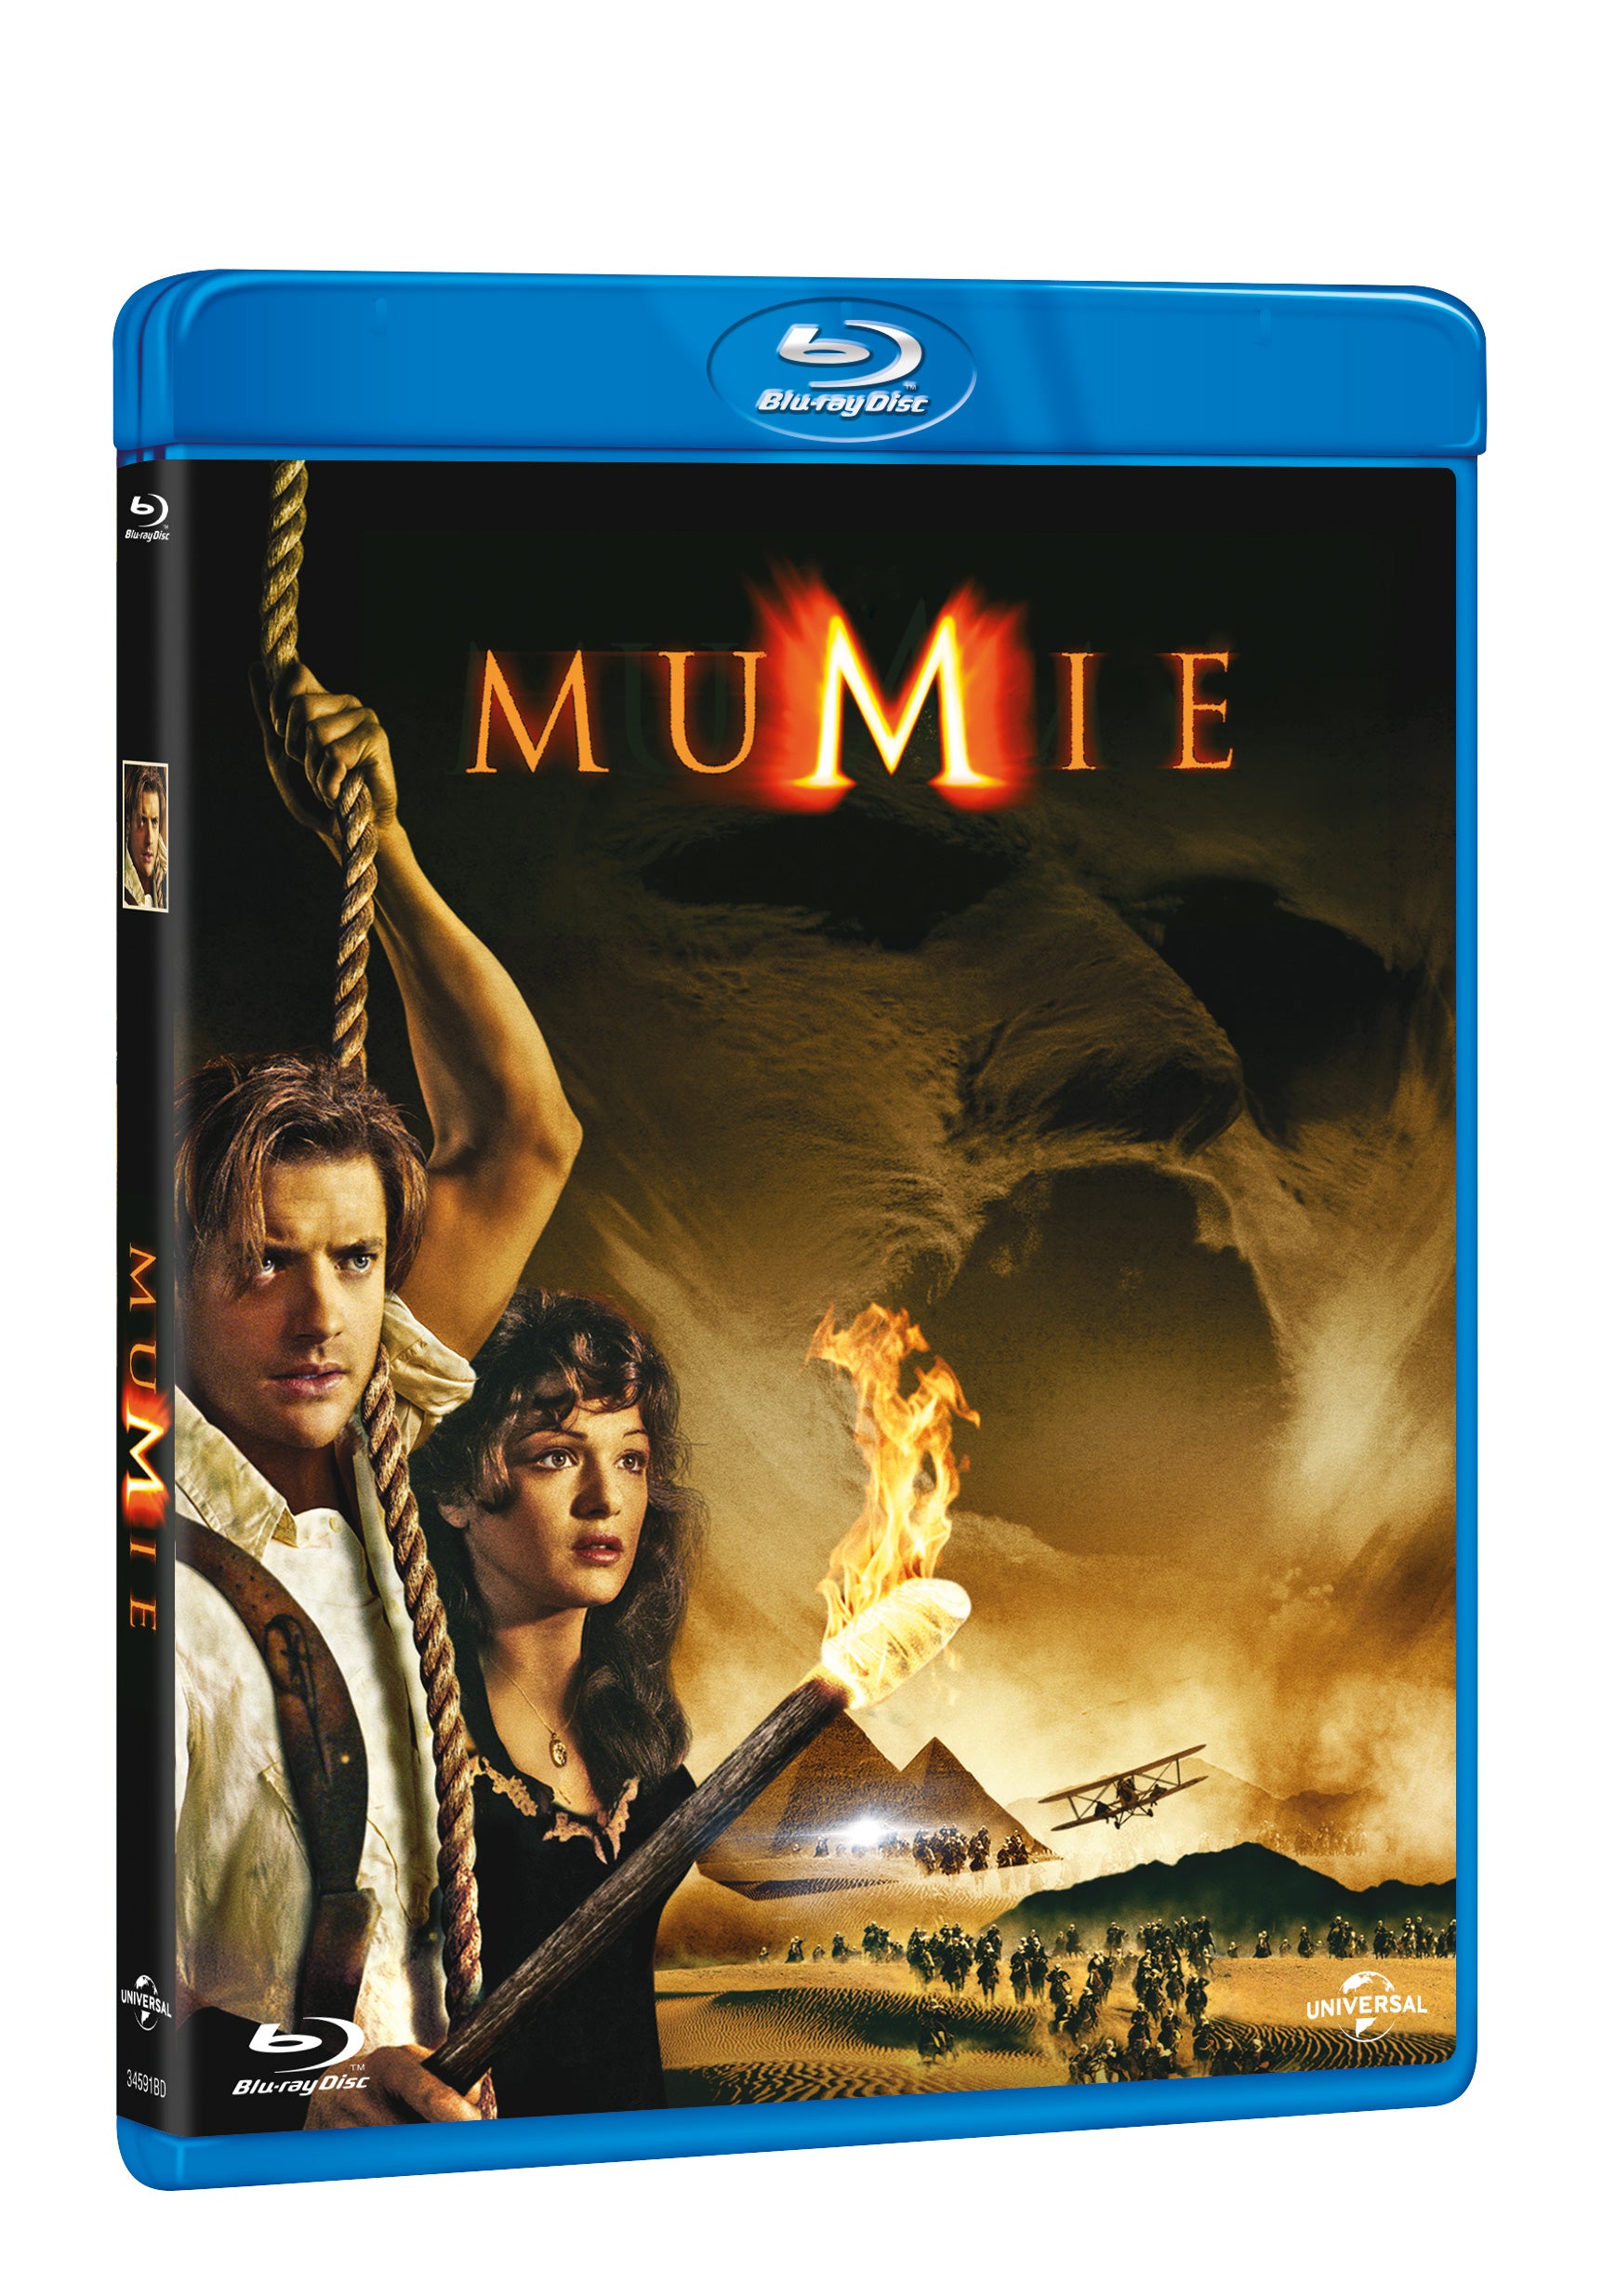 Mumie BD (1999) / The Mummy - Czech version